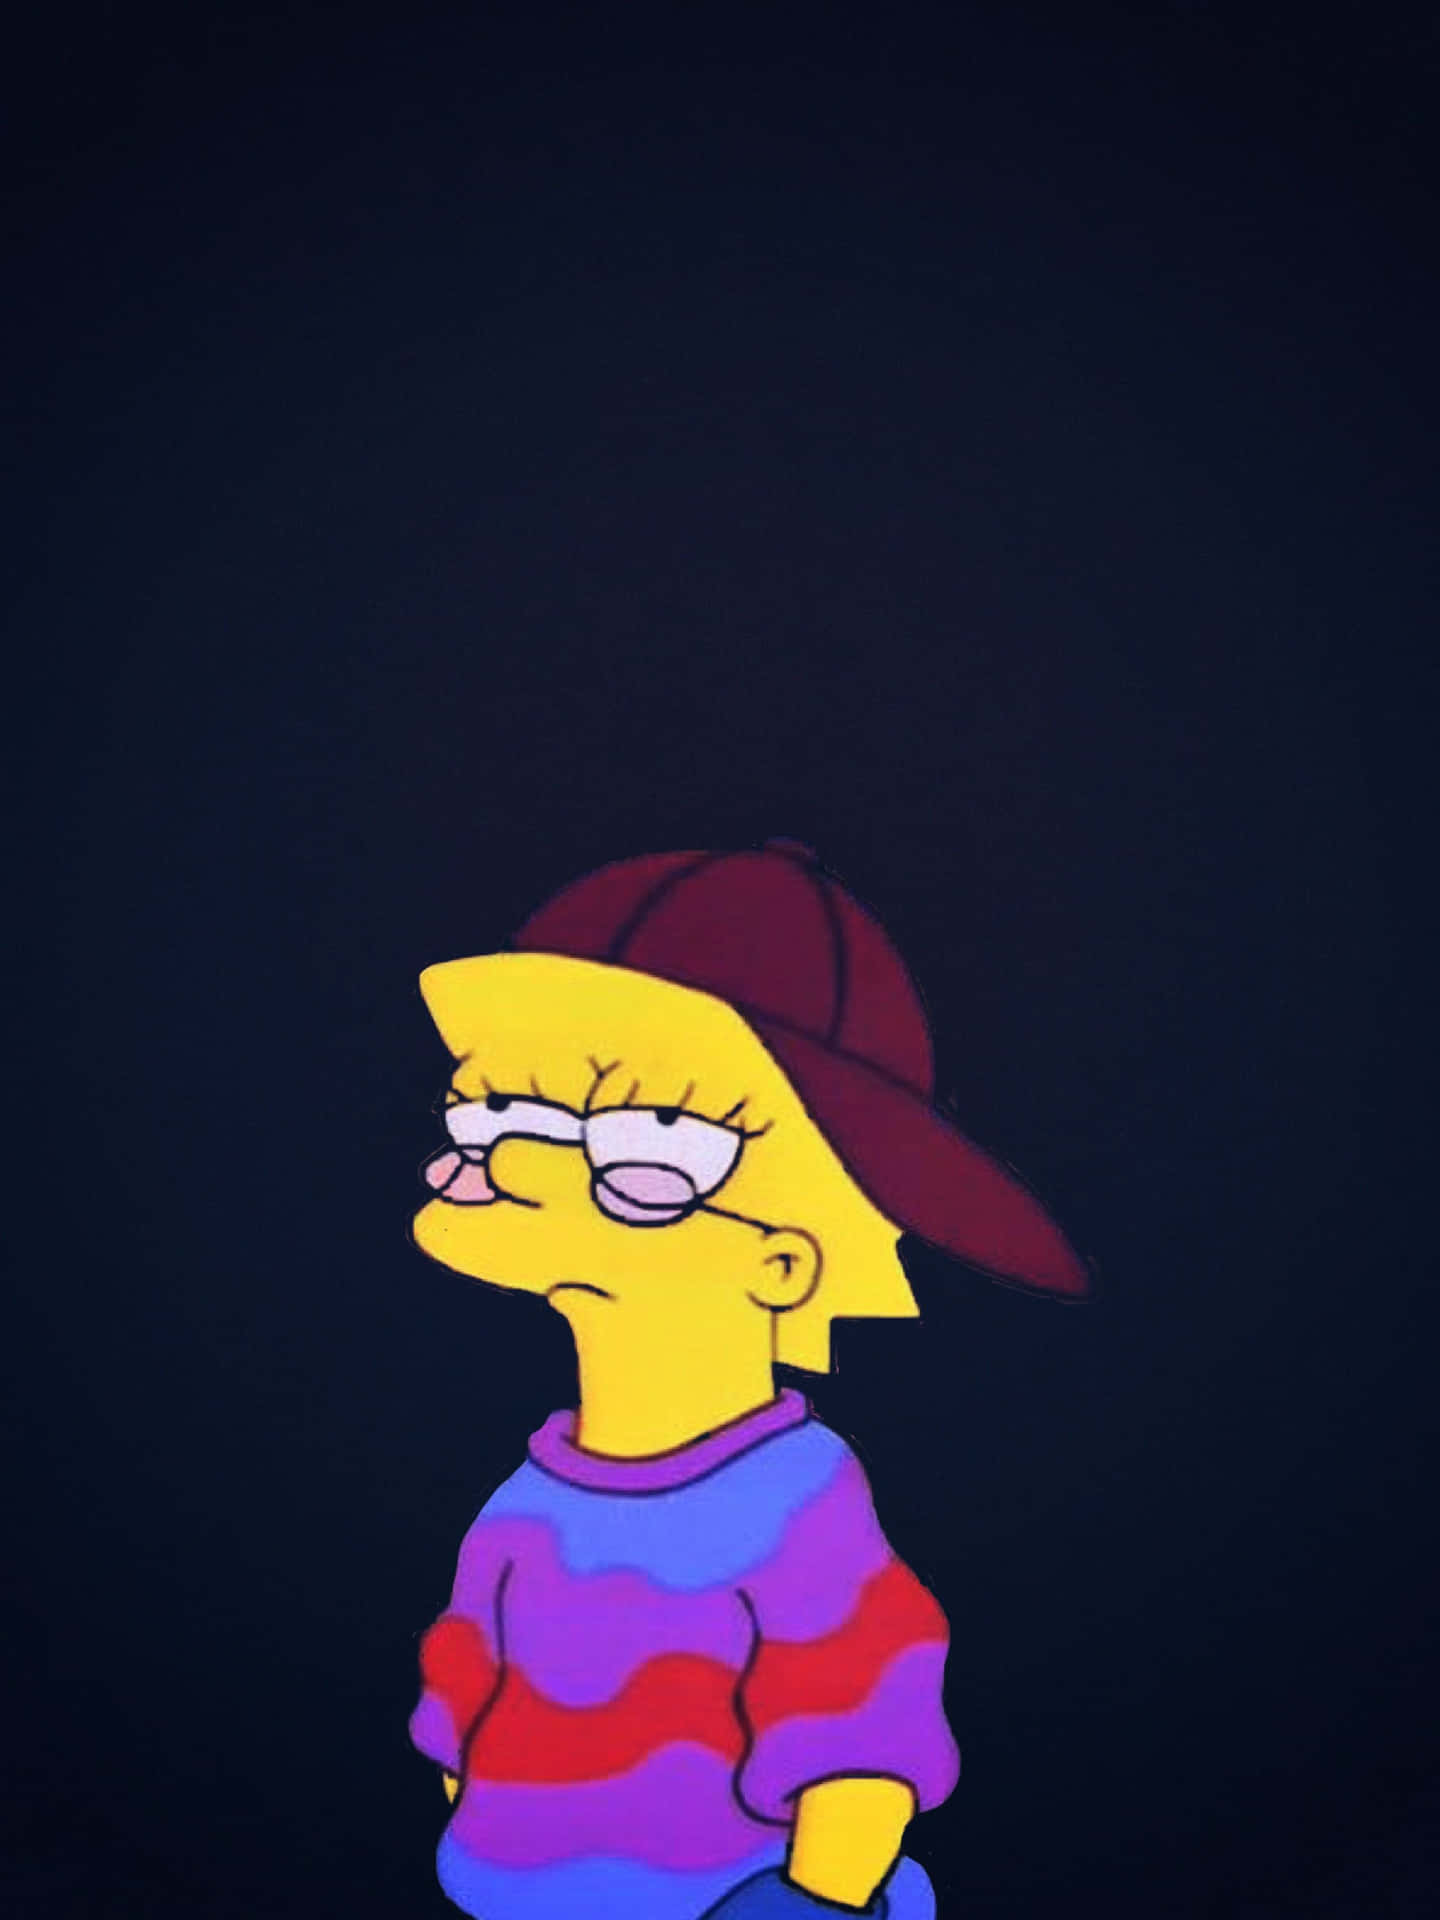 Sad Lisa Simpson With A Maroon Cap Wallpaper